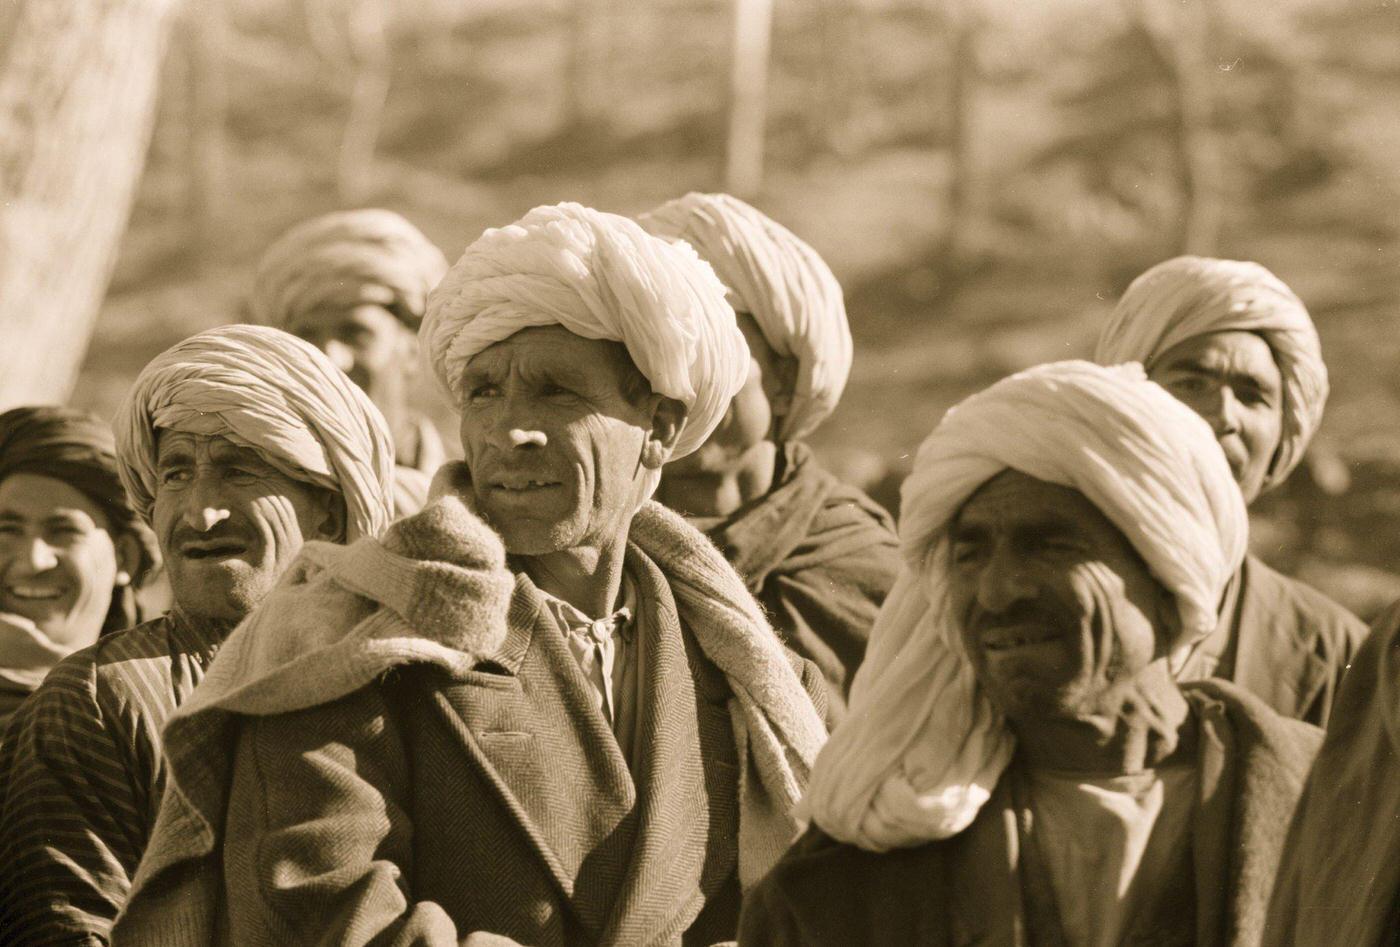 Afghanis during President Eisenhower's visit to Kabul, 1959.